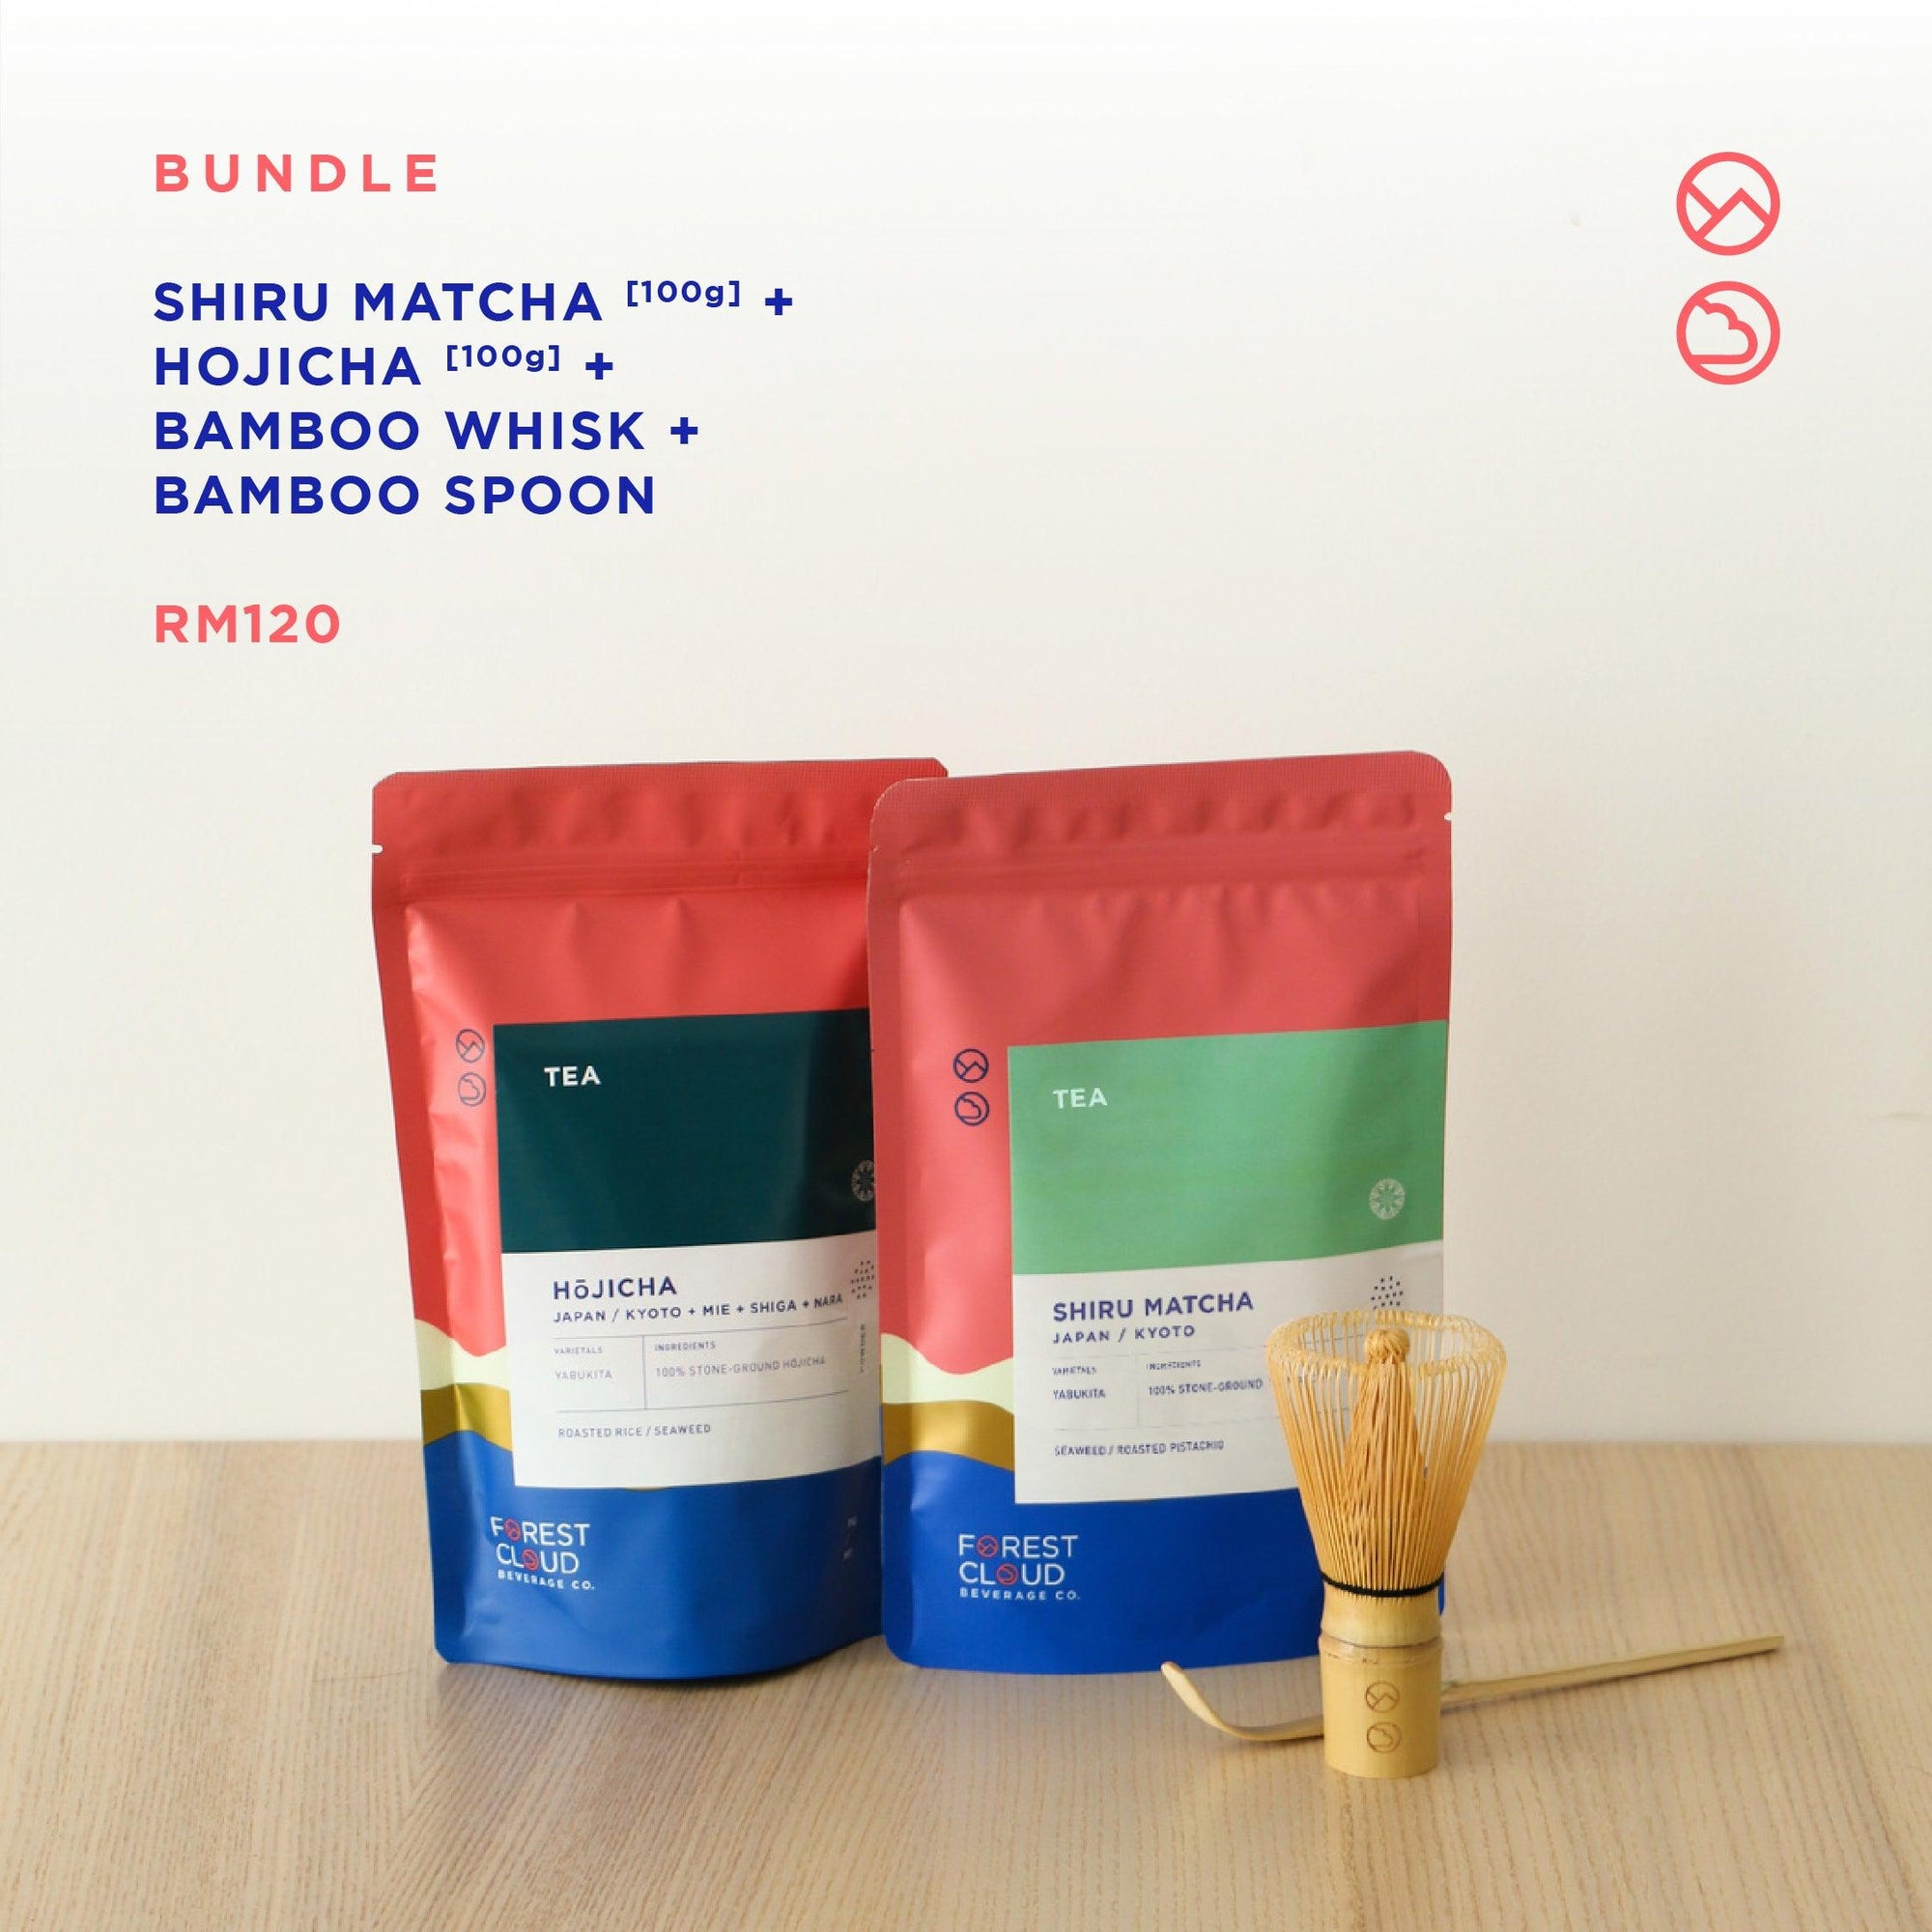 Bundle: Shiru Matcha + Hojicha + Bamboo Whisk + Bamboo Spoon - Forest Cloud